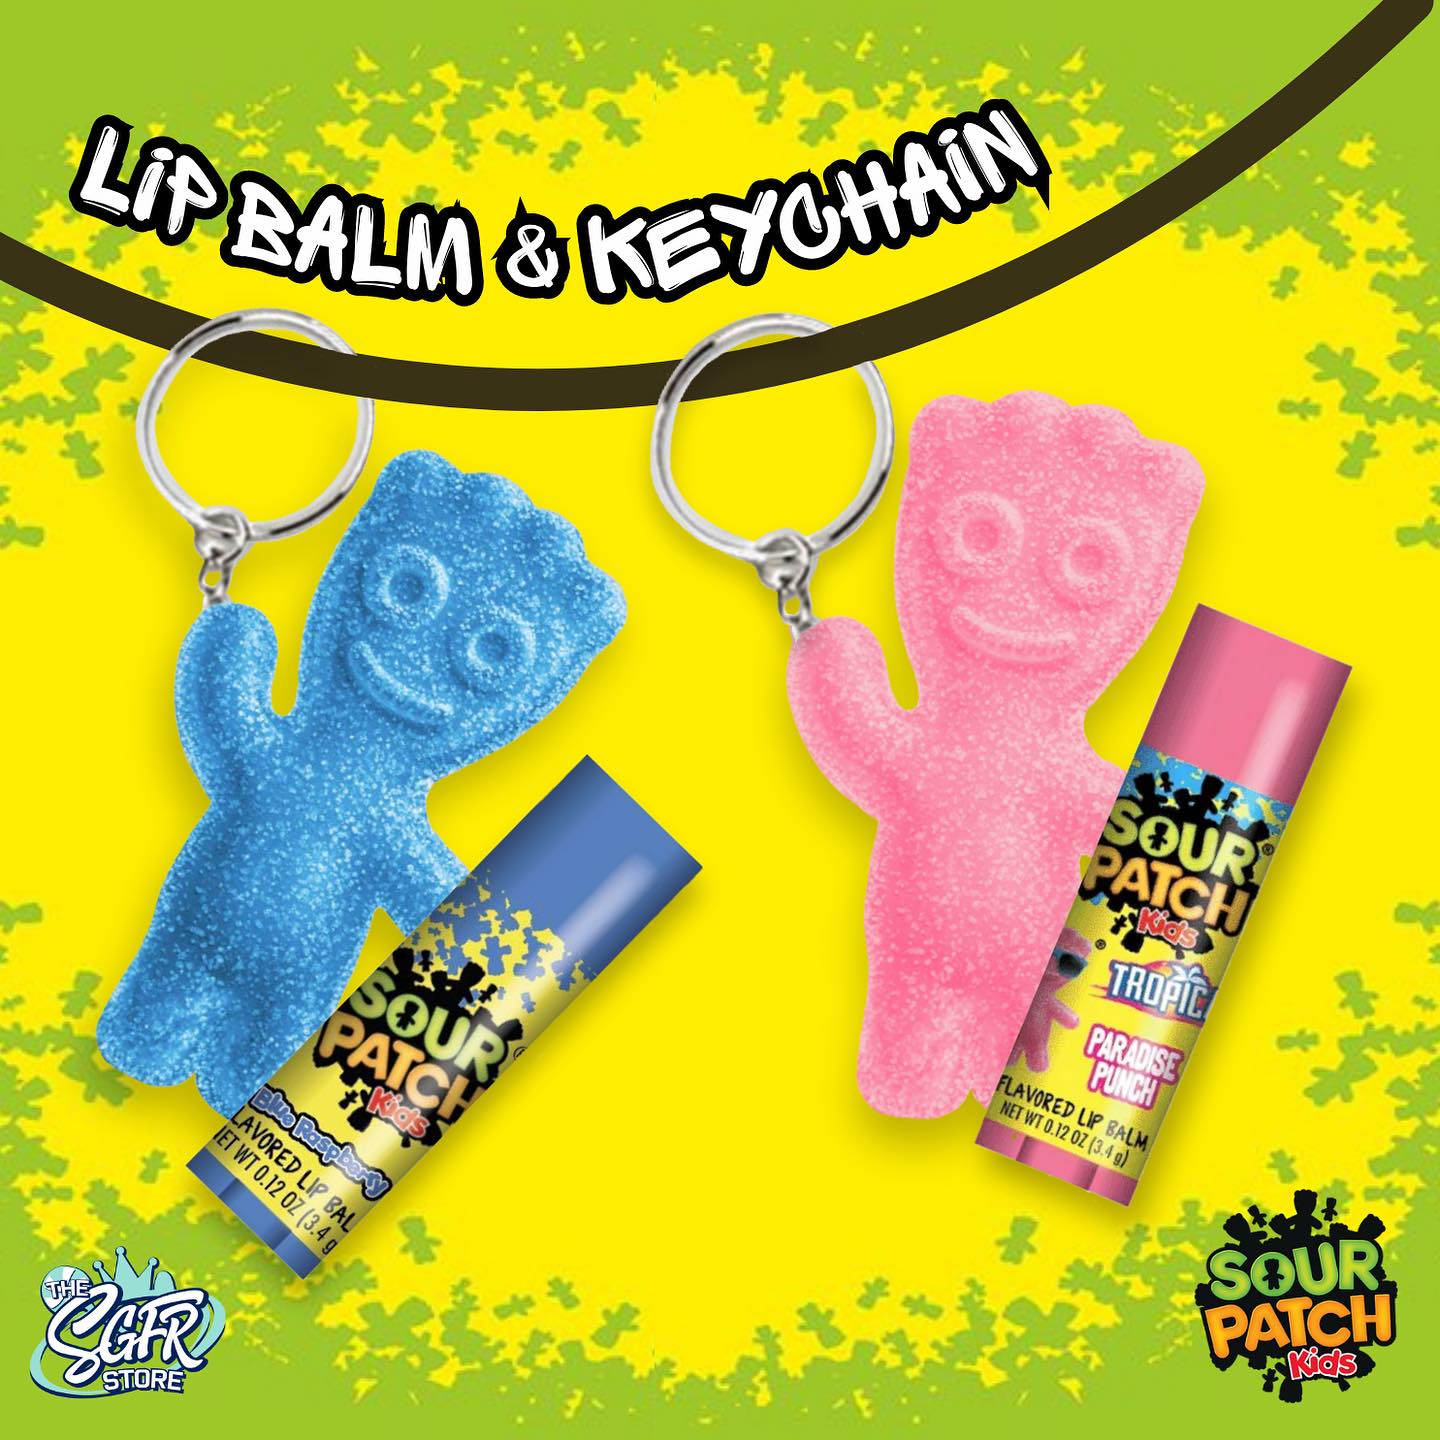 Sour Patch Kids Lip Gloss & Keychain (Non Edible)